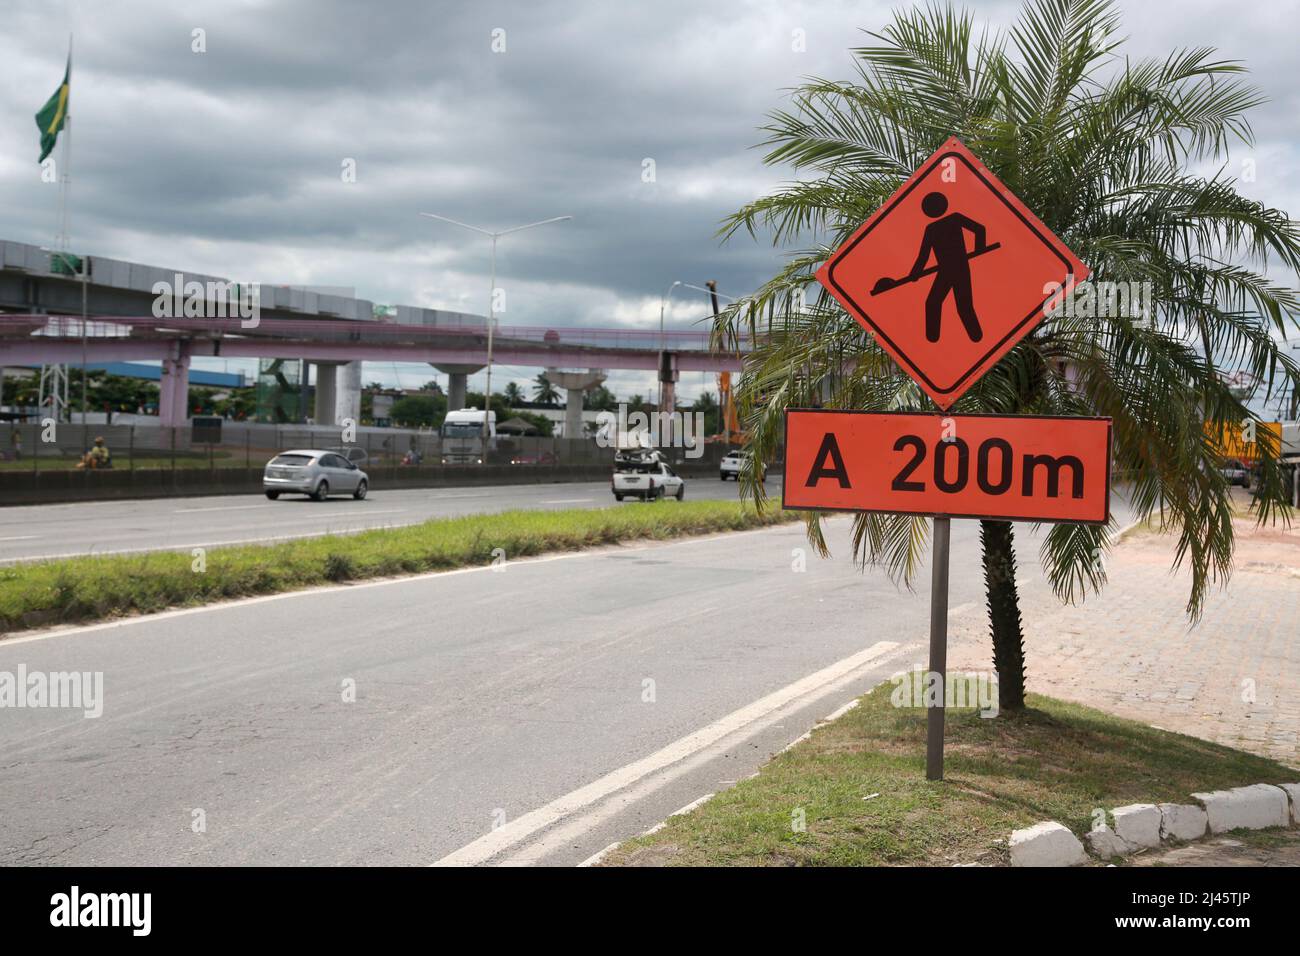 salvador, bahia, brazil - april 11, 2022: traffic sign indicates construction site along highway BR 324 Stock Photo